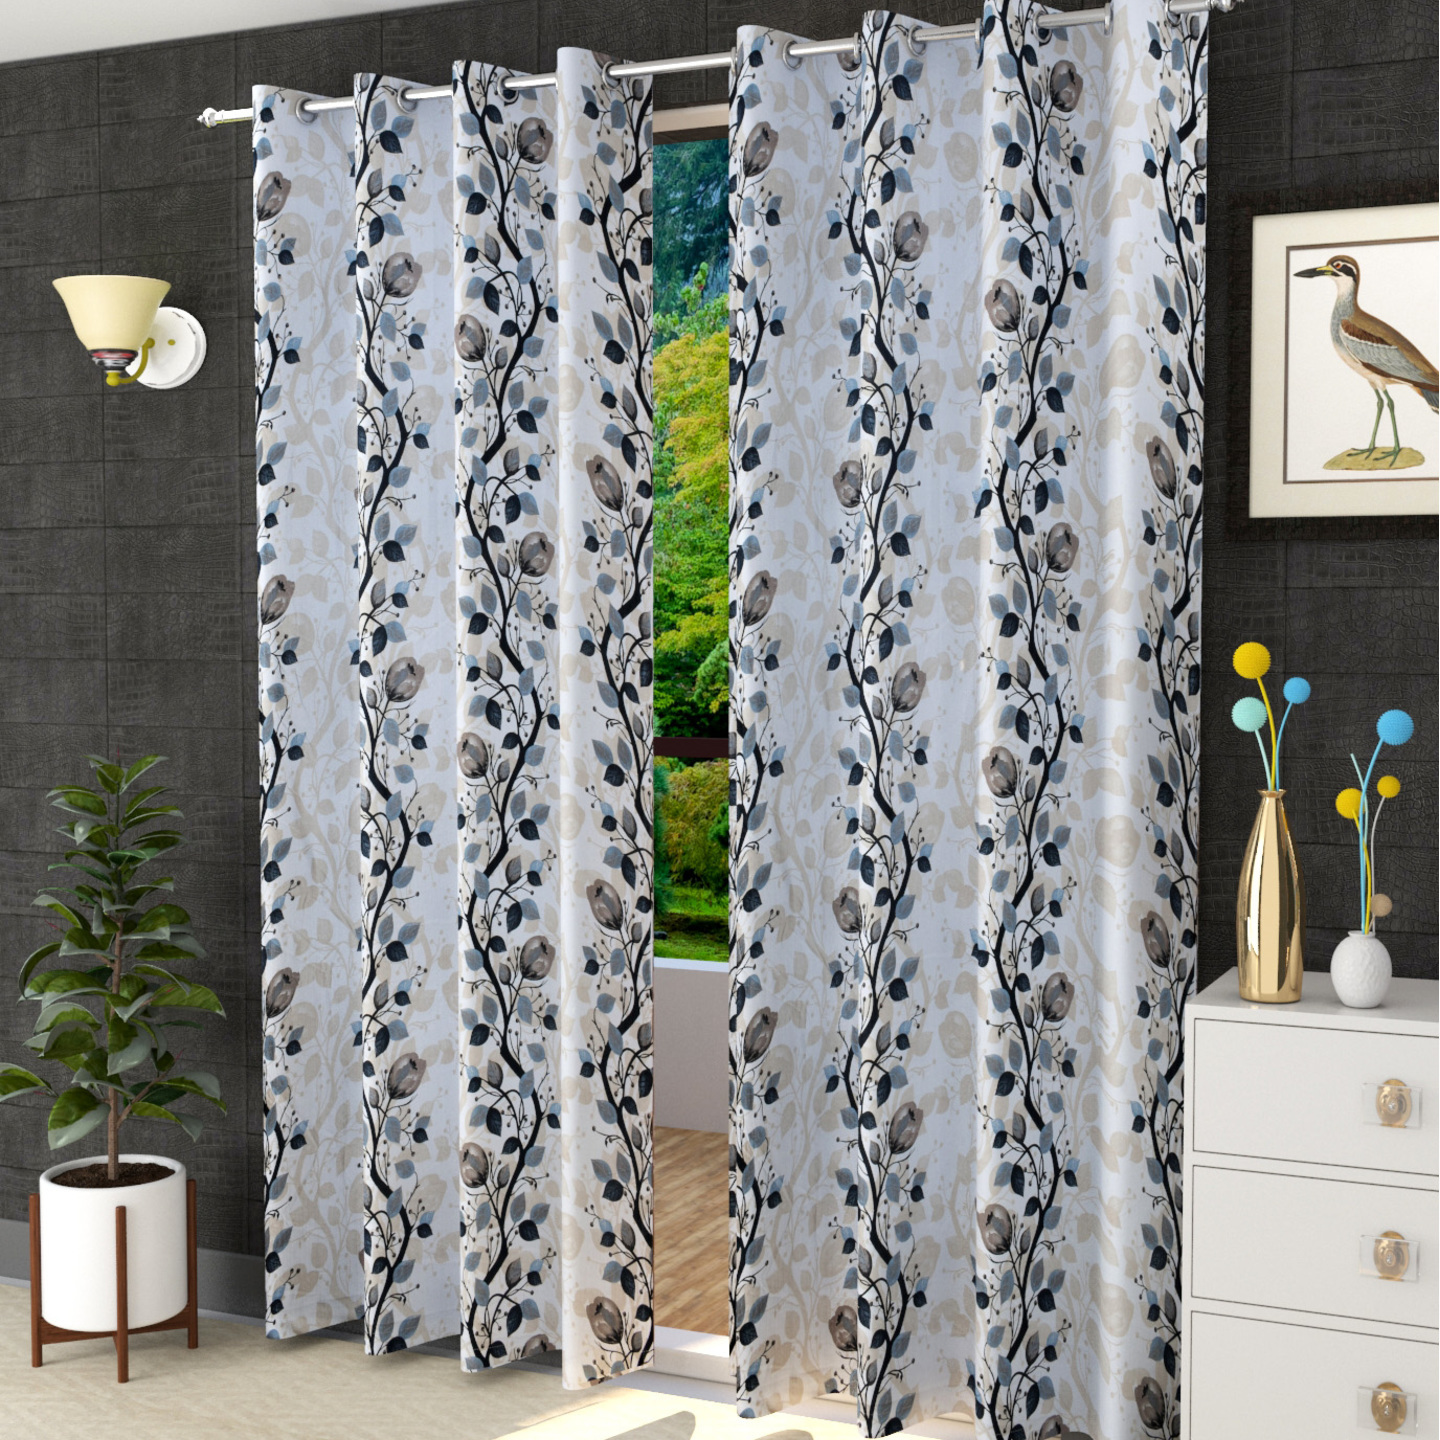  Handtex Home Long Crush Printed Curtains for Door 9 Feet Pack of 2,Grey (Grey, Door 9 Feet) 